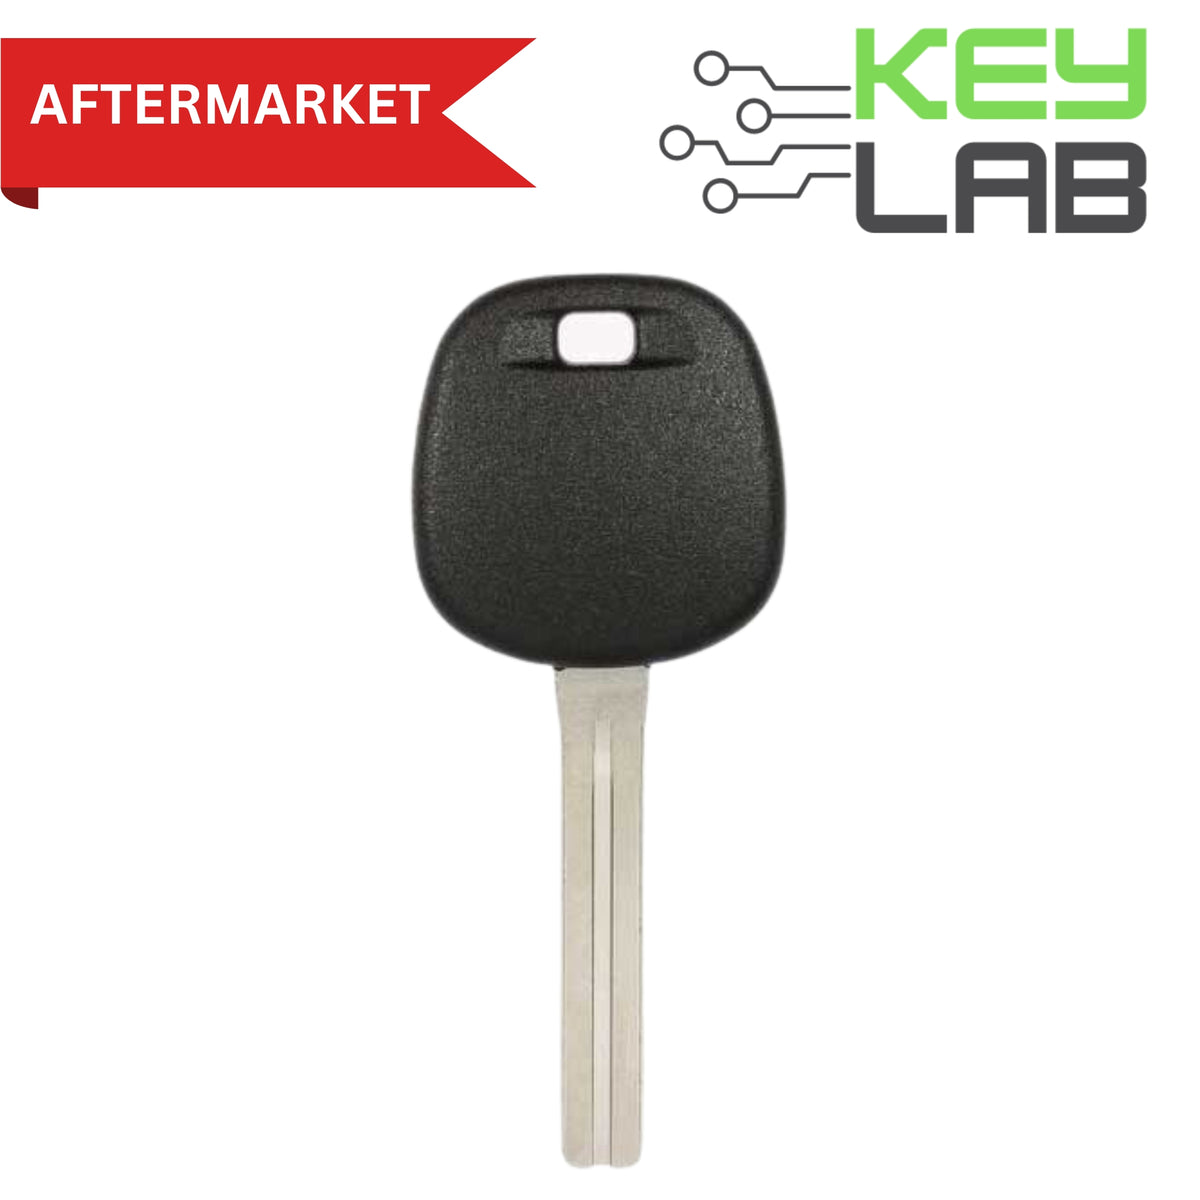 Kia Aftermarket 2007-2011 Optima, Amanti Transponder Key KK9 - Royal Key Supply